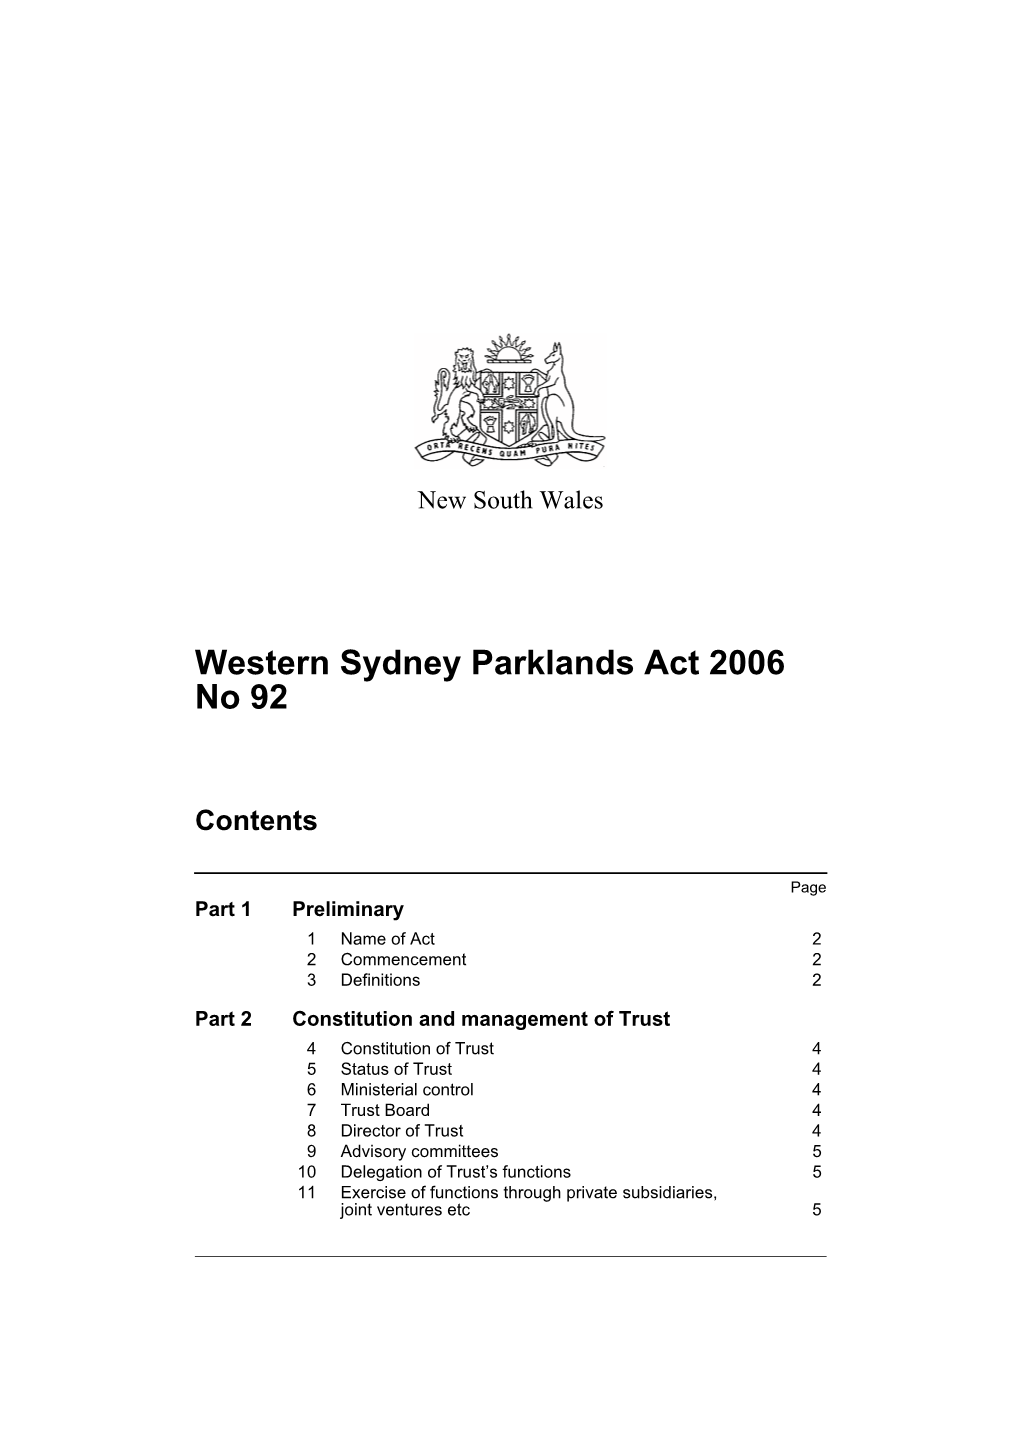 Western Sydney Parklands Act 2006 No 92